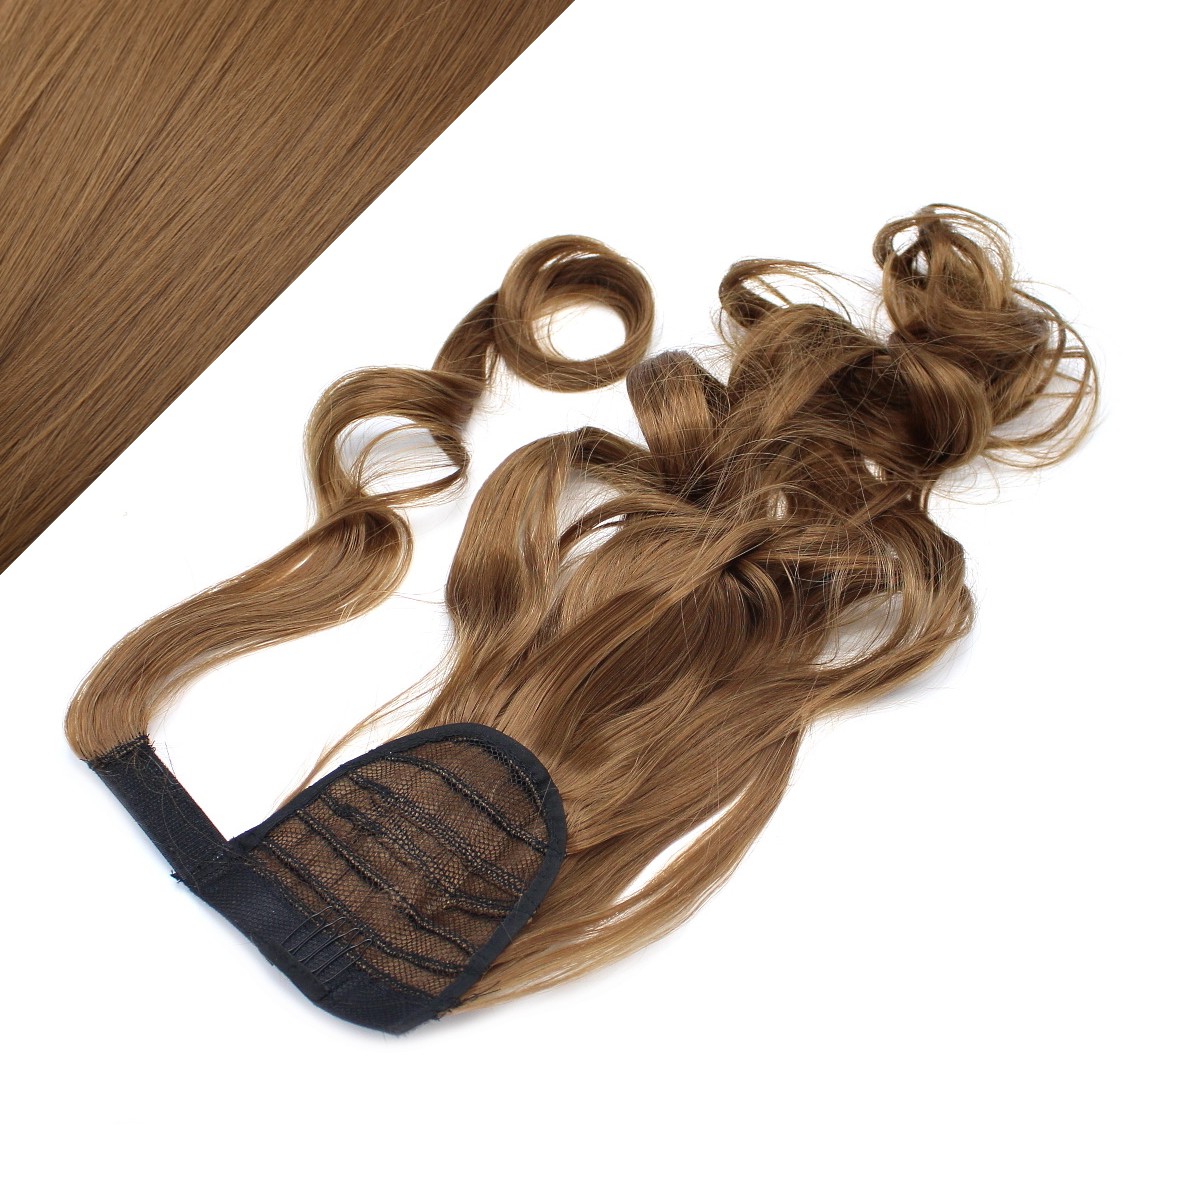 Clip in ponytail wrap / braid hair extension 24